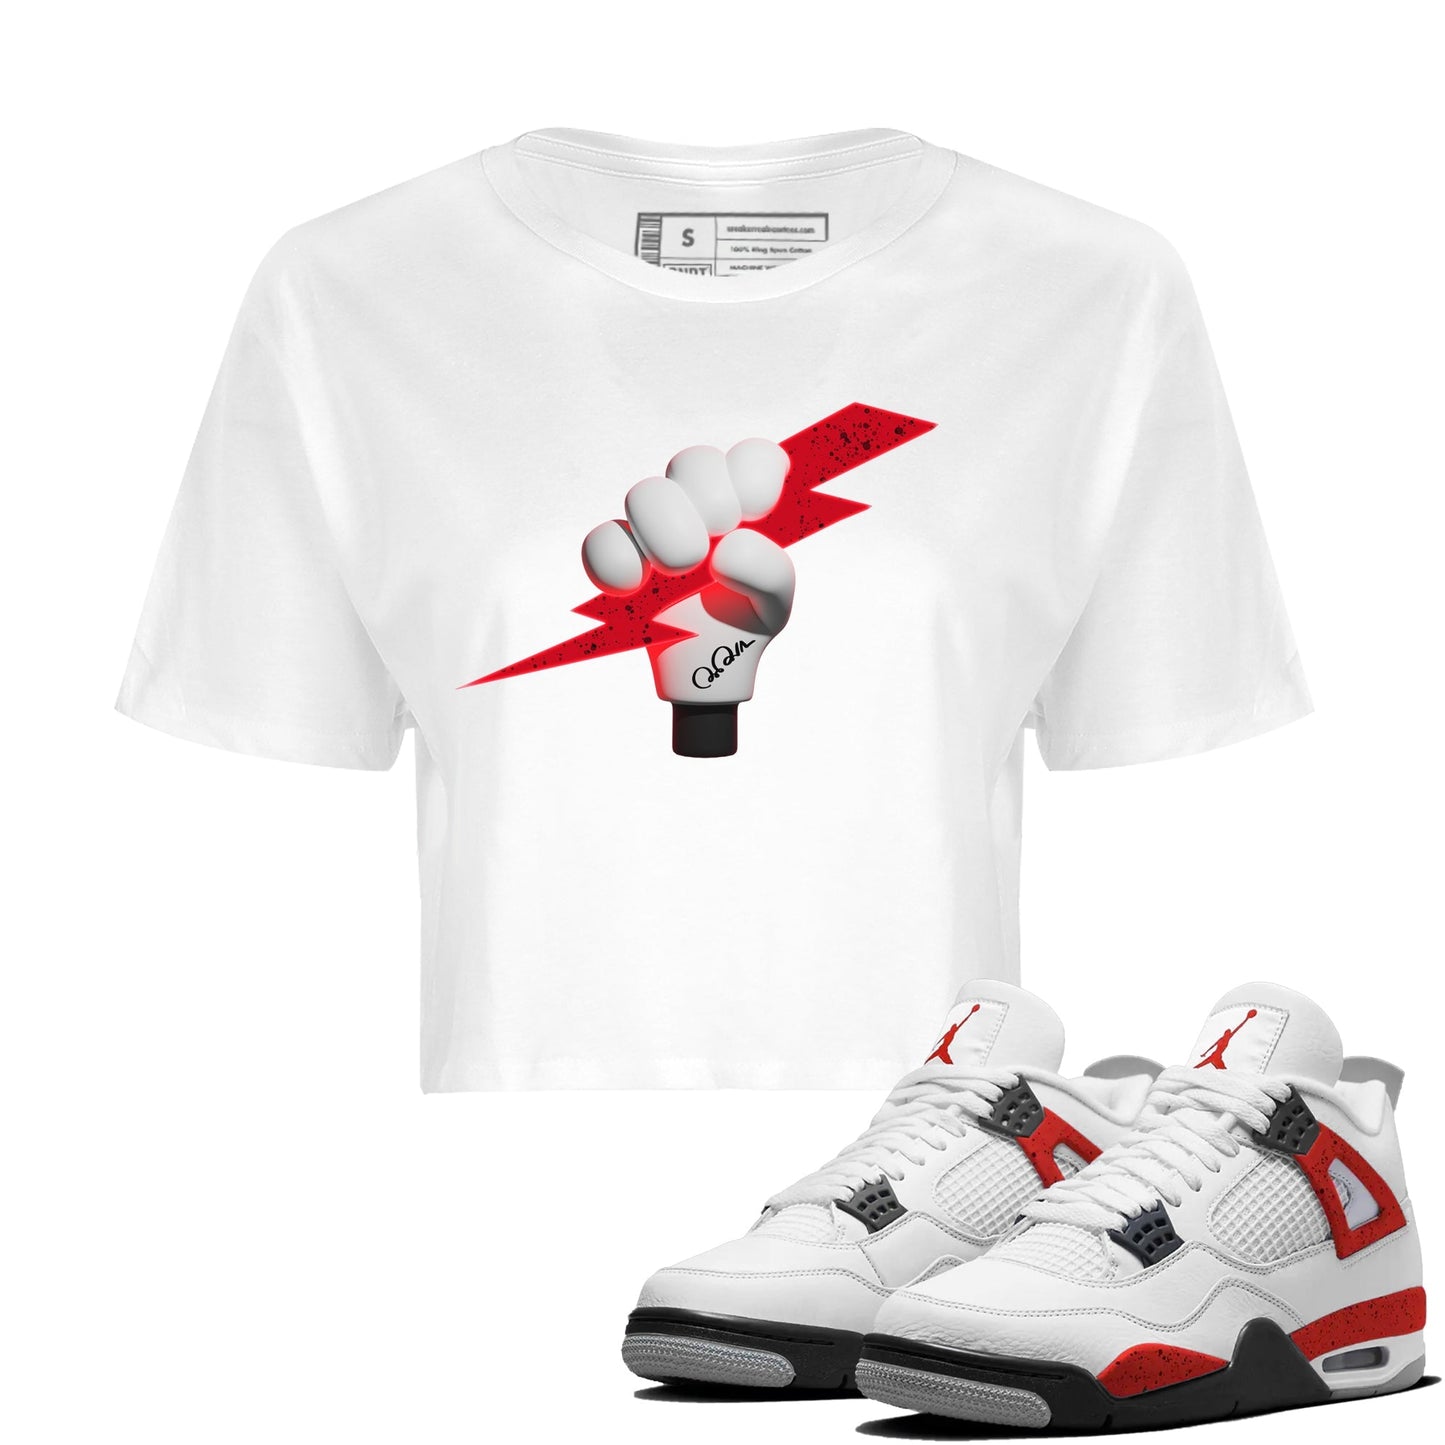 Air Jordan 4 Red Cement Sneaker Match Tees Grab Thunder Sneaker Tees AJ4 Retro OG Red Cement Sneaker Release Tees Women's Shirts White 1